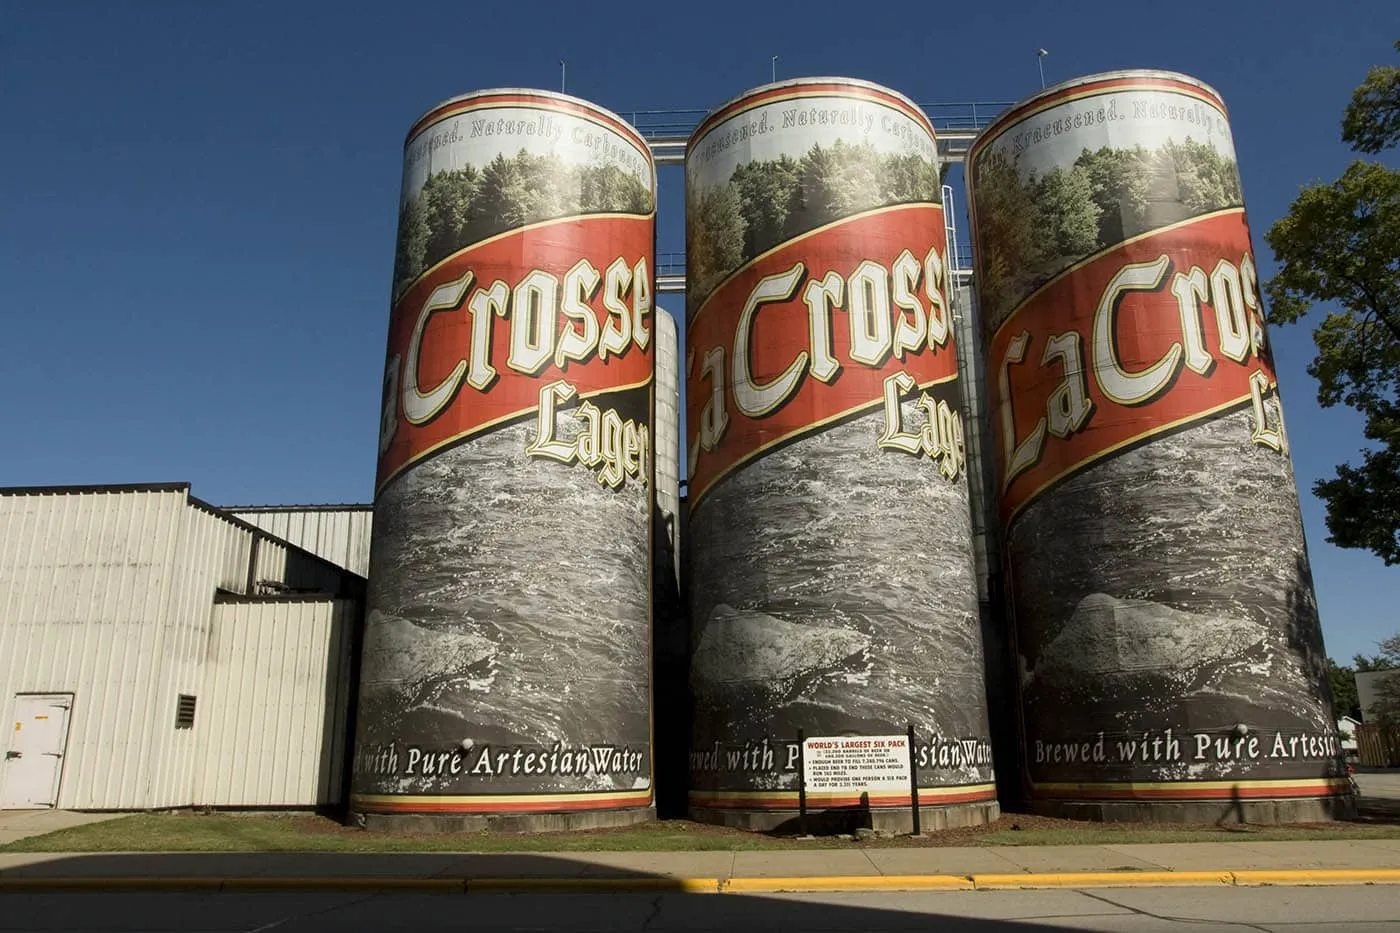 World's Largest Six-Pack of Beer, a roadside attraction in La Crosse, Wisconsin